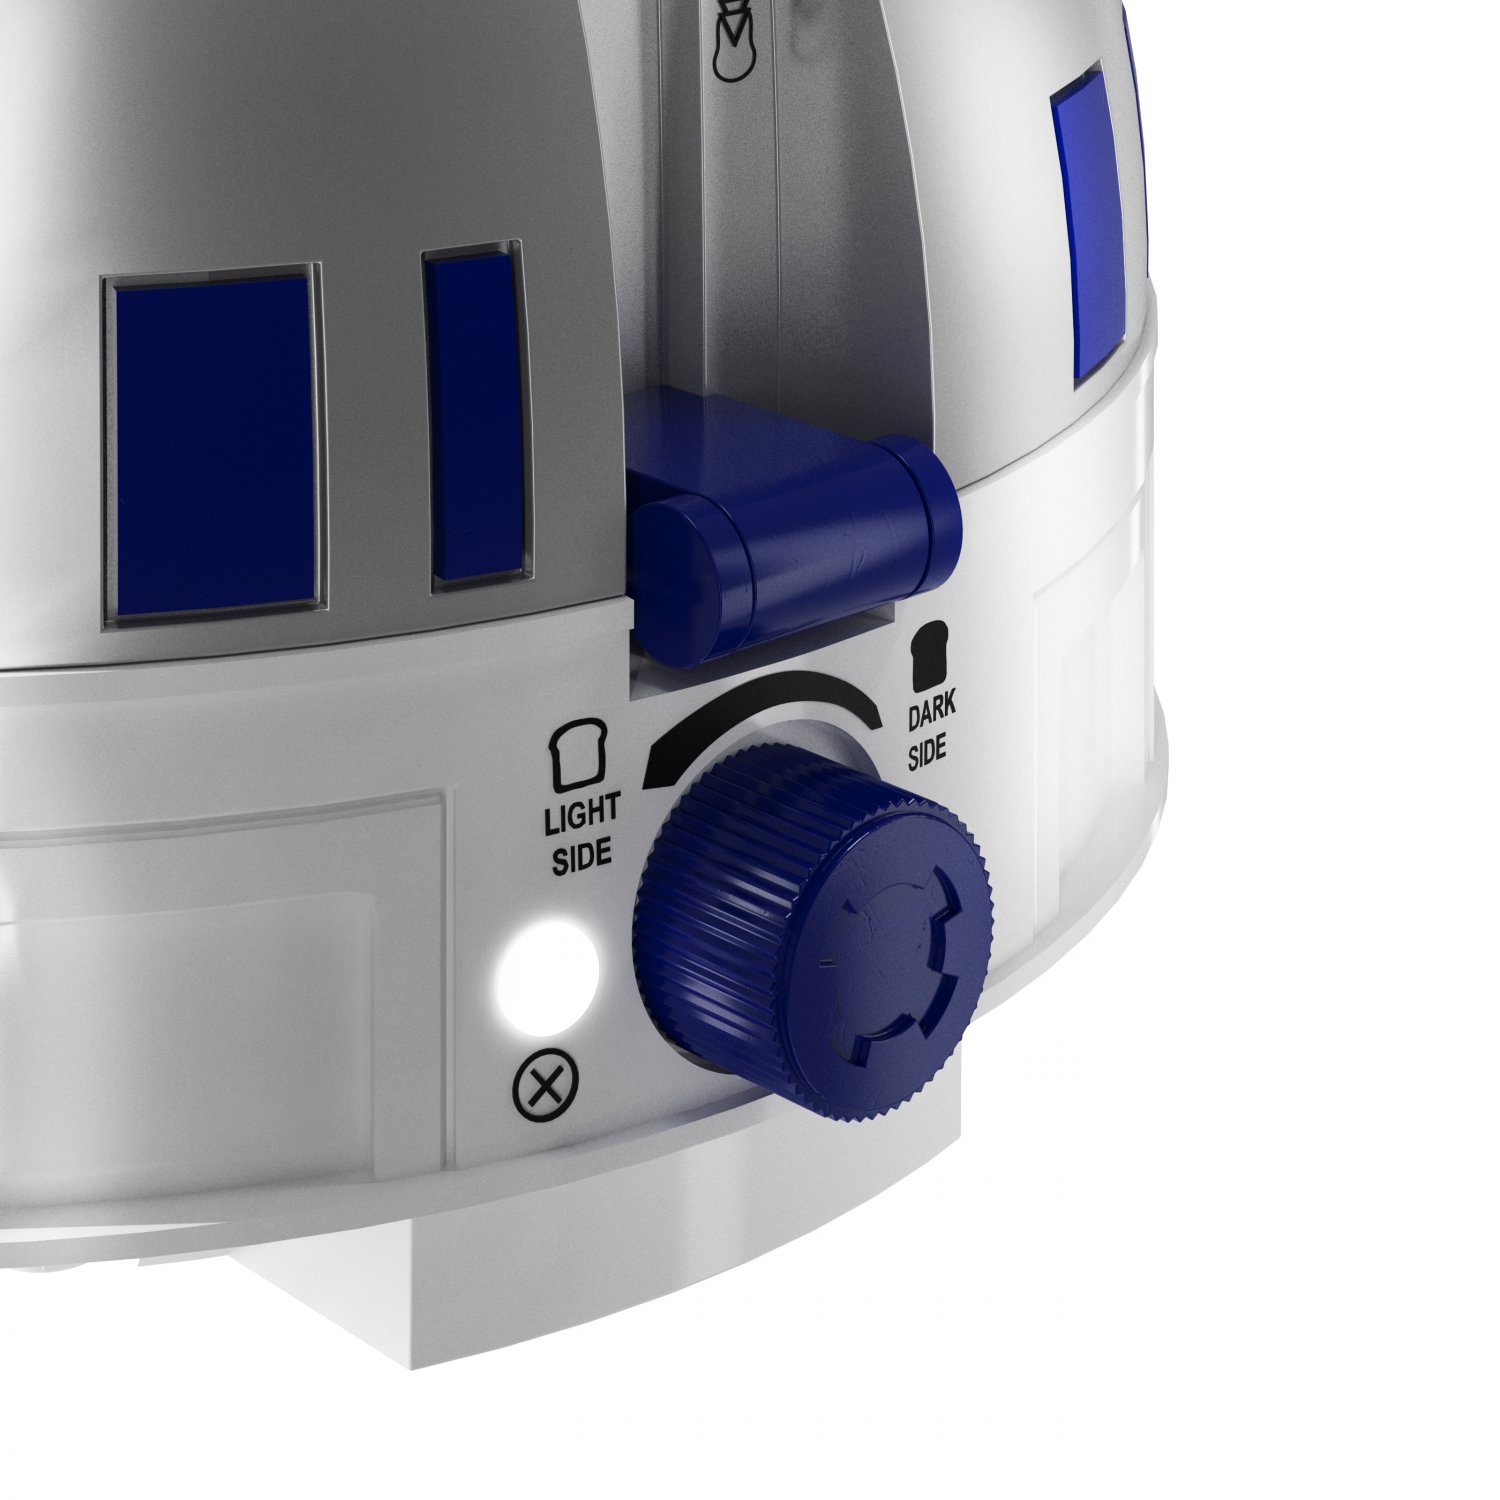 Cartoon R2-D2 Robot Office Home Mini Manual Coffee Maker, Coffee